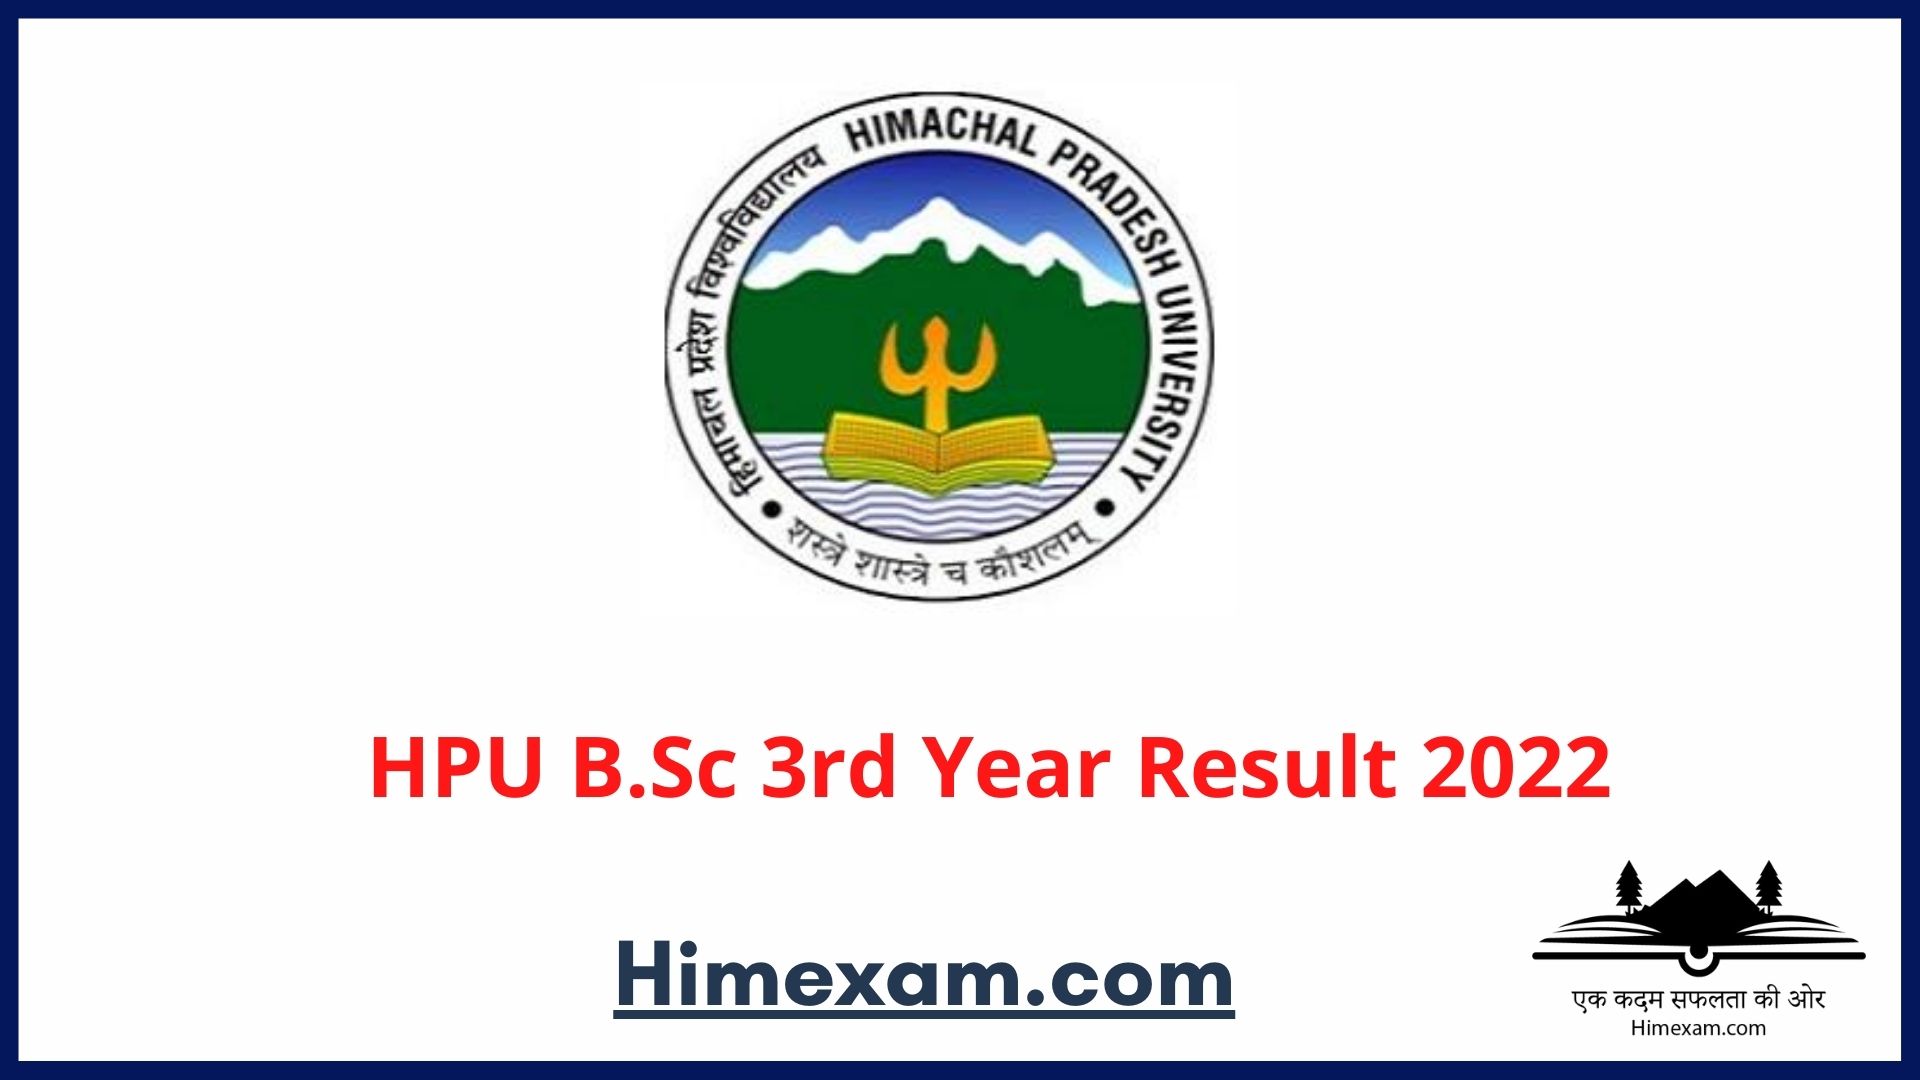 ||HPU B.Sc Final Year Result 2022||HPU B.Sc 3rd Year Result 2022||